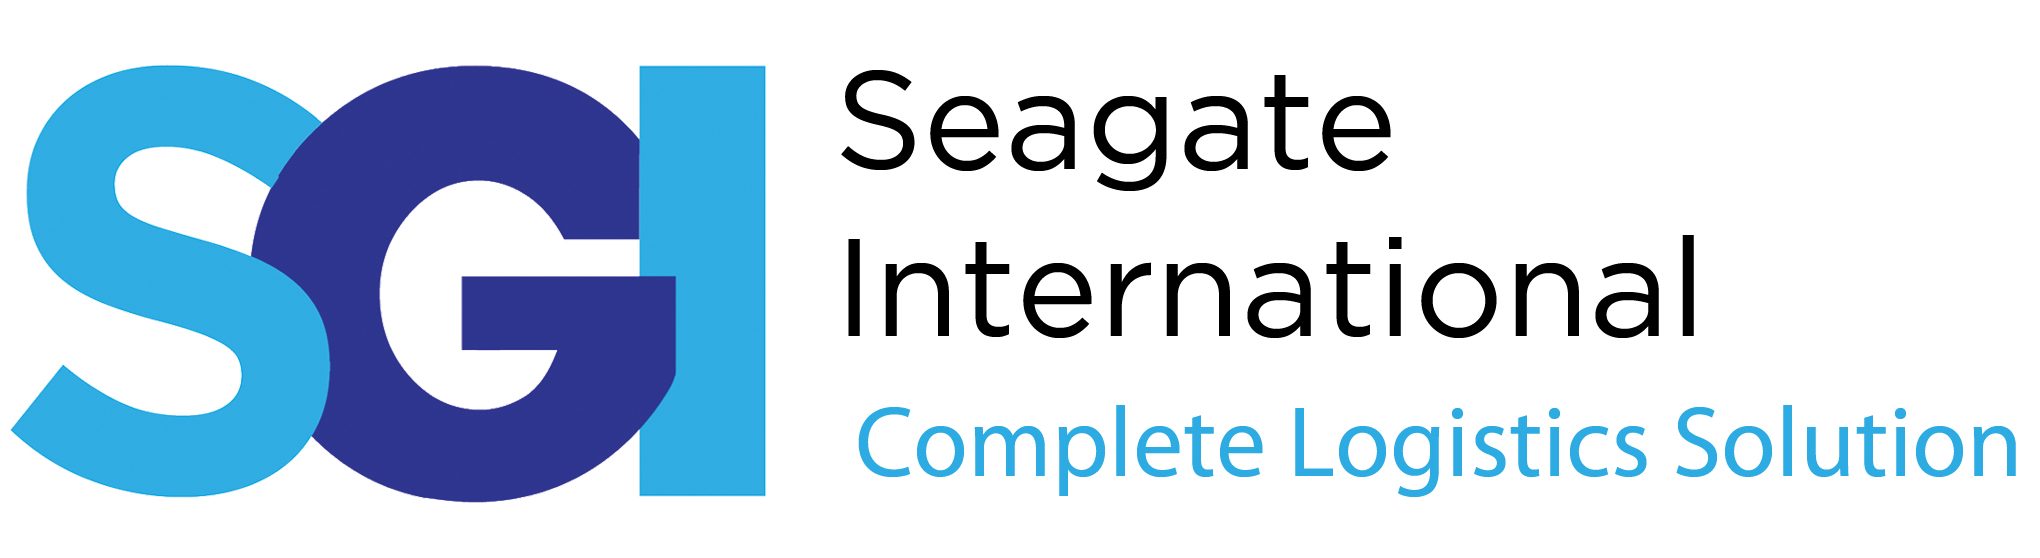 Seagate International